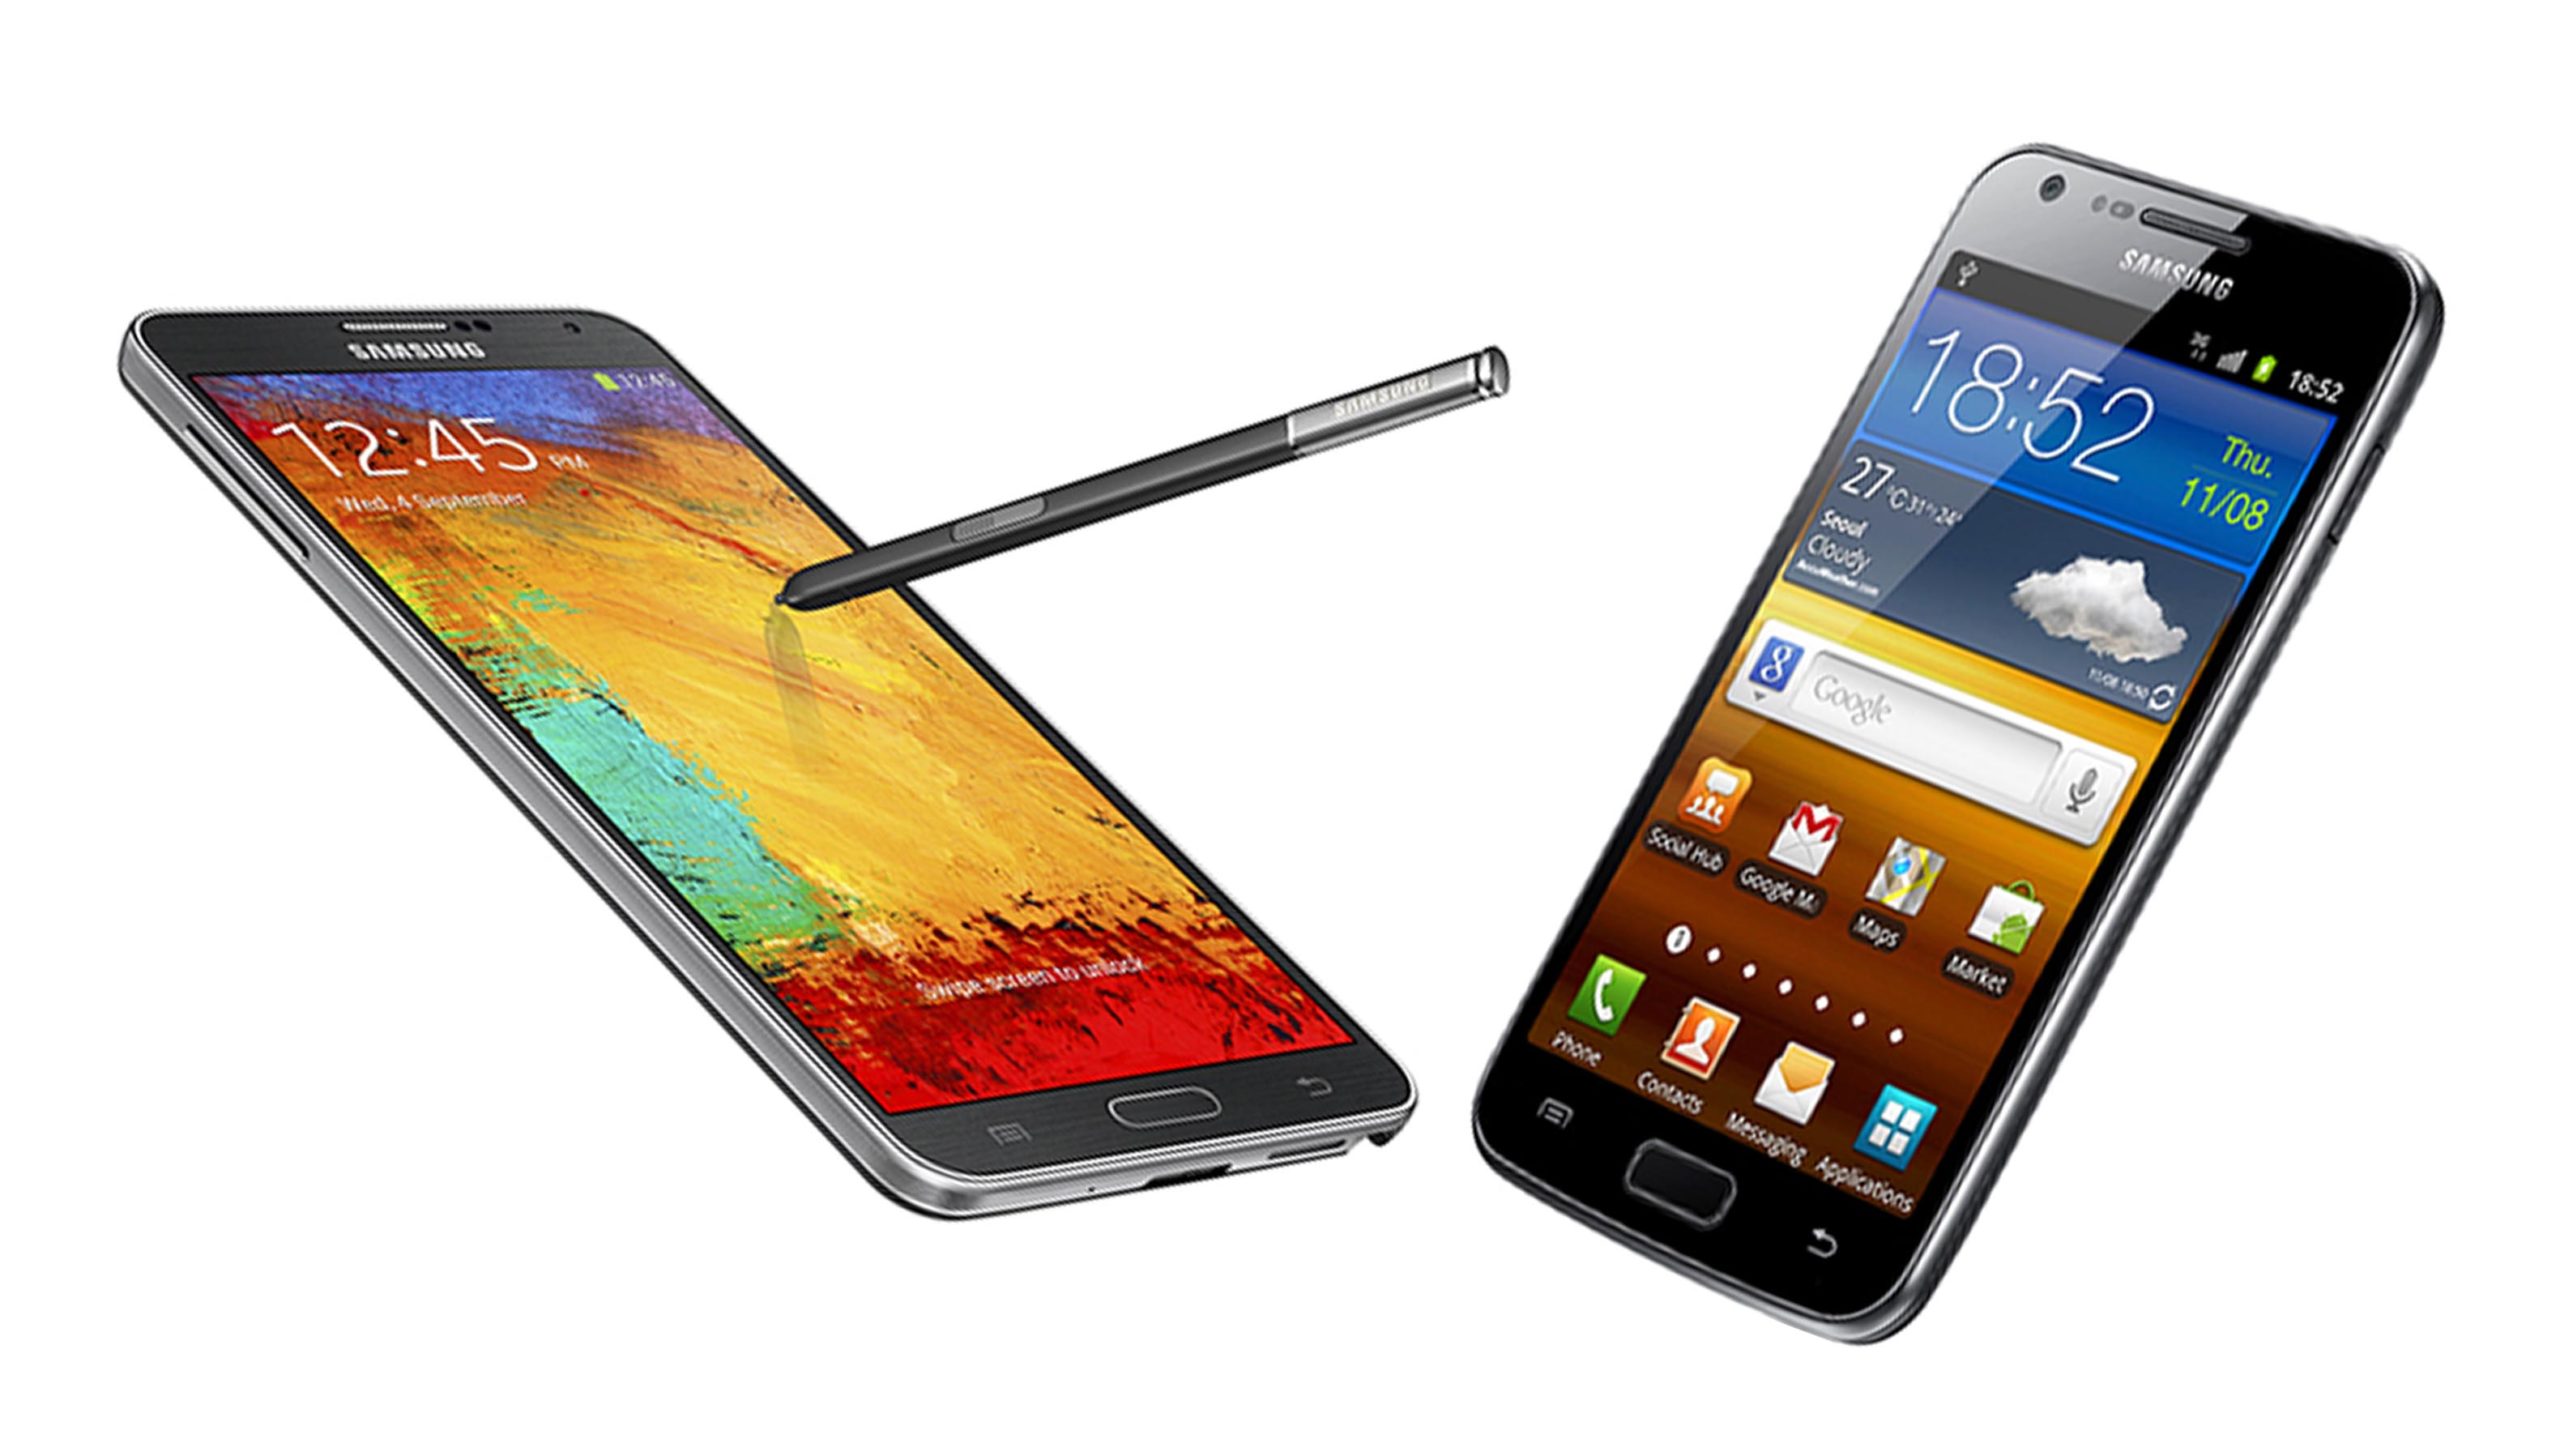 Samsung Galaxy Note 3 and Galaxy SII